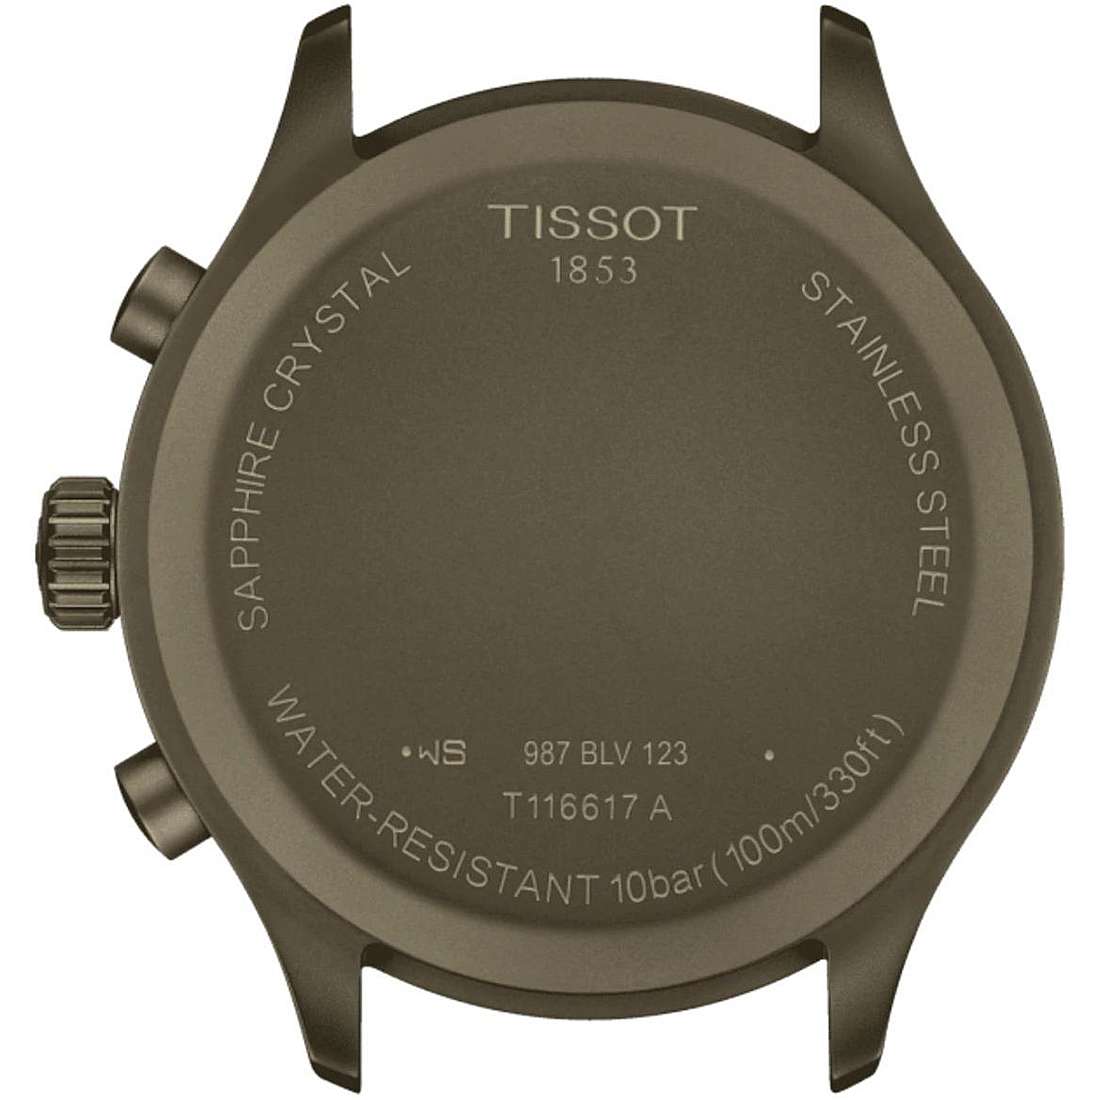 Uhr Chronograph mann Tissot T-Sport Xl T1166173609200